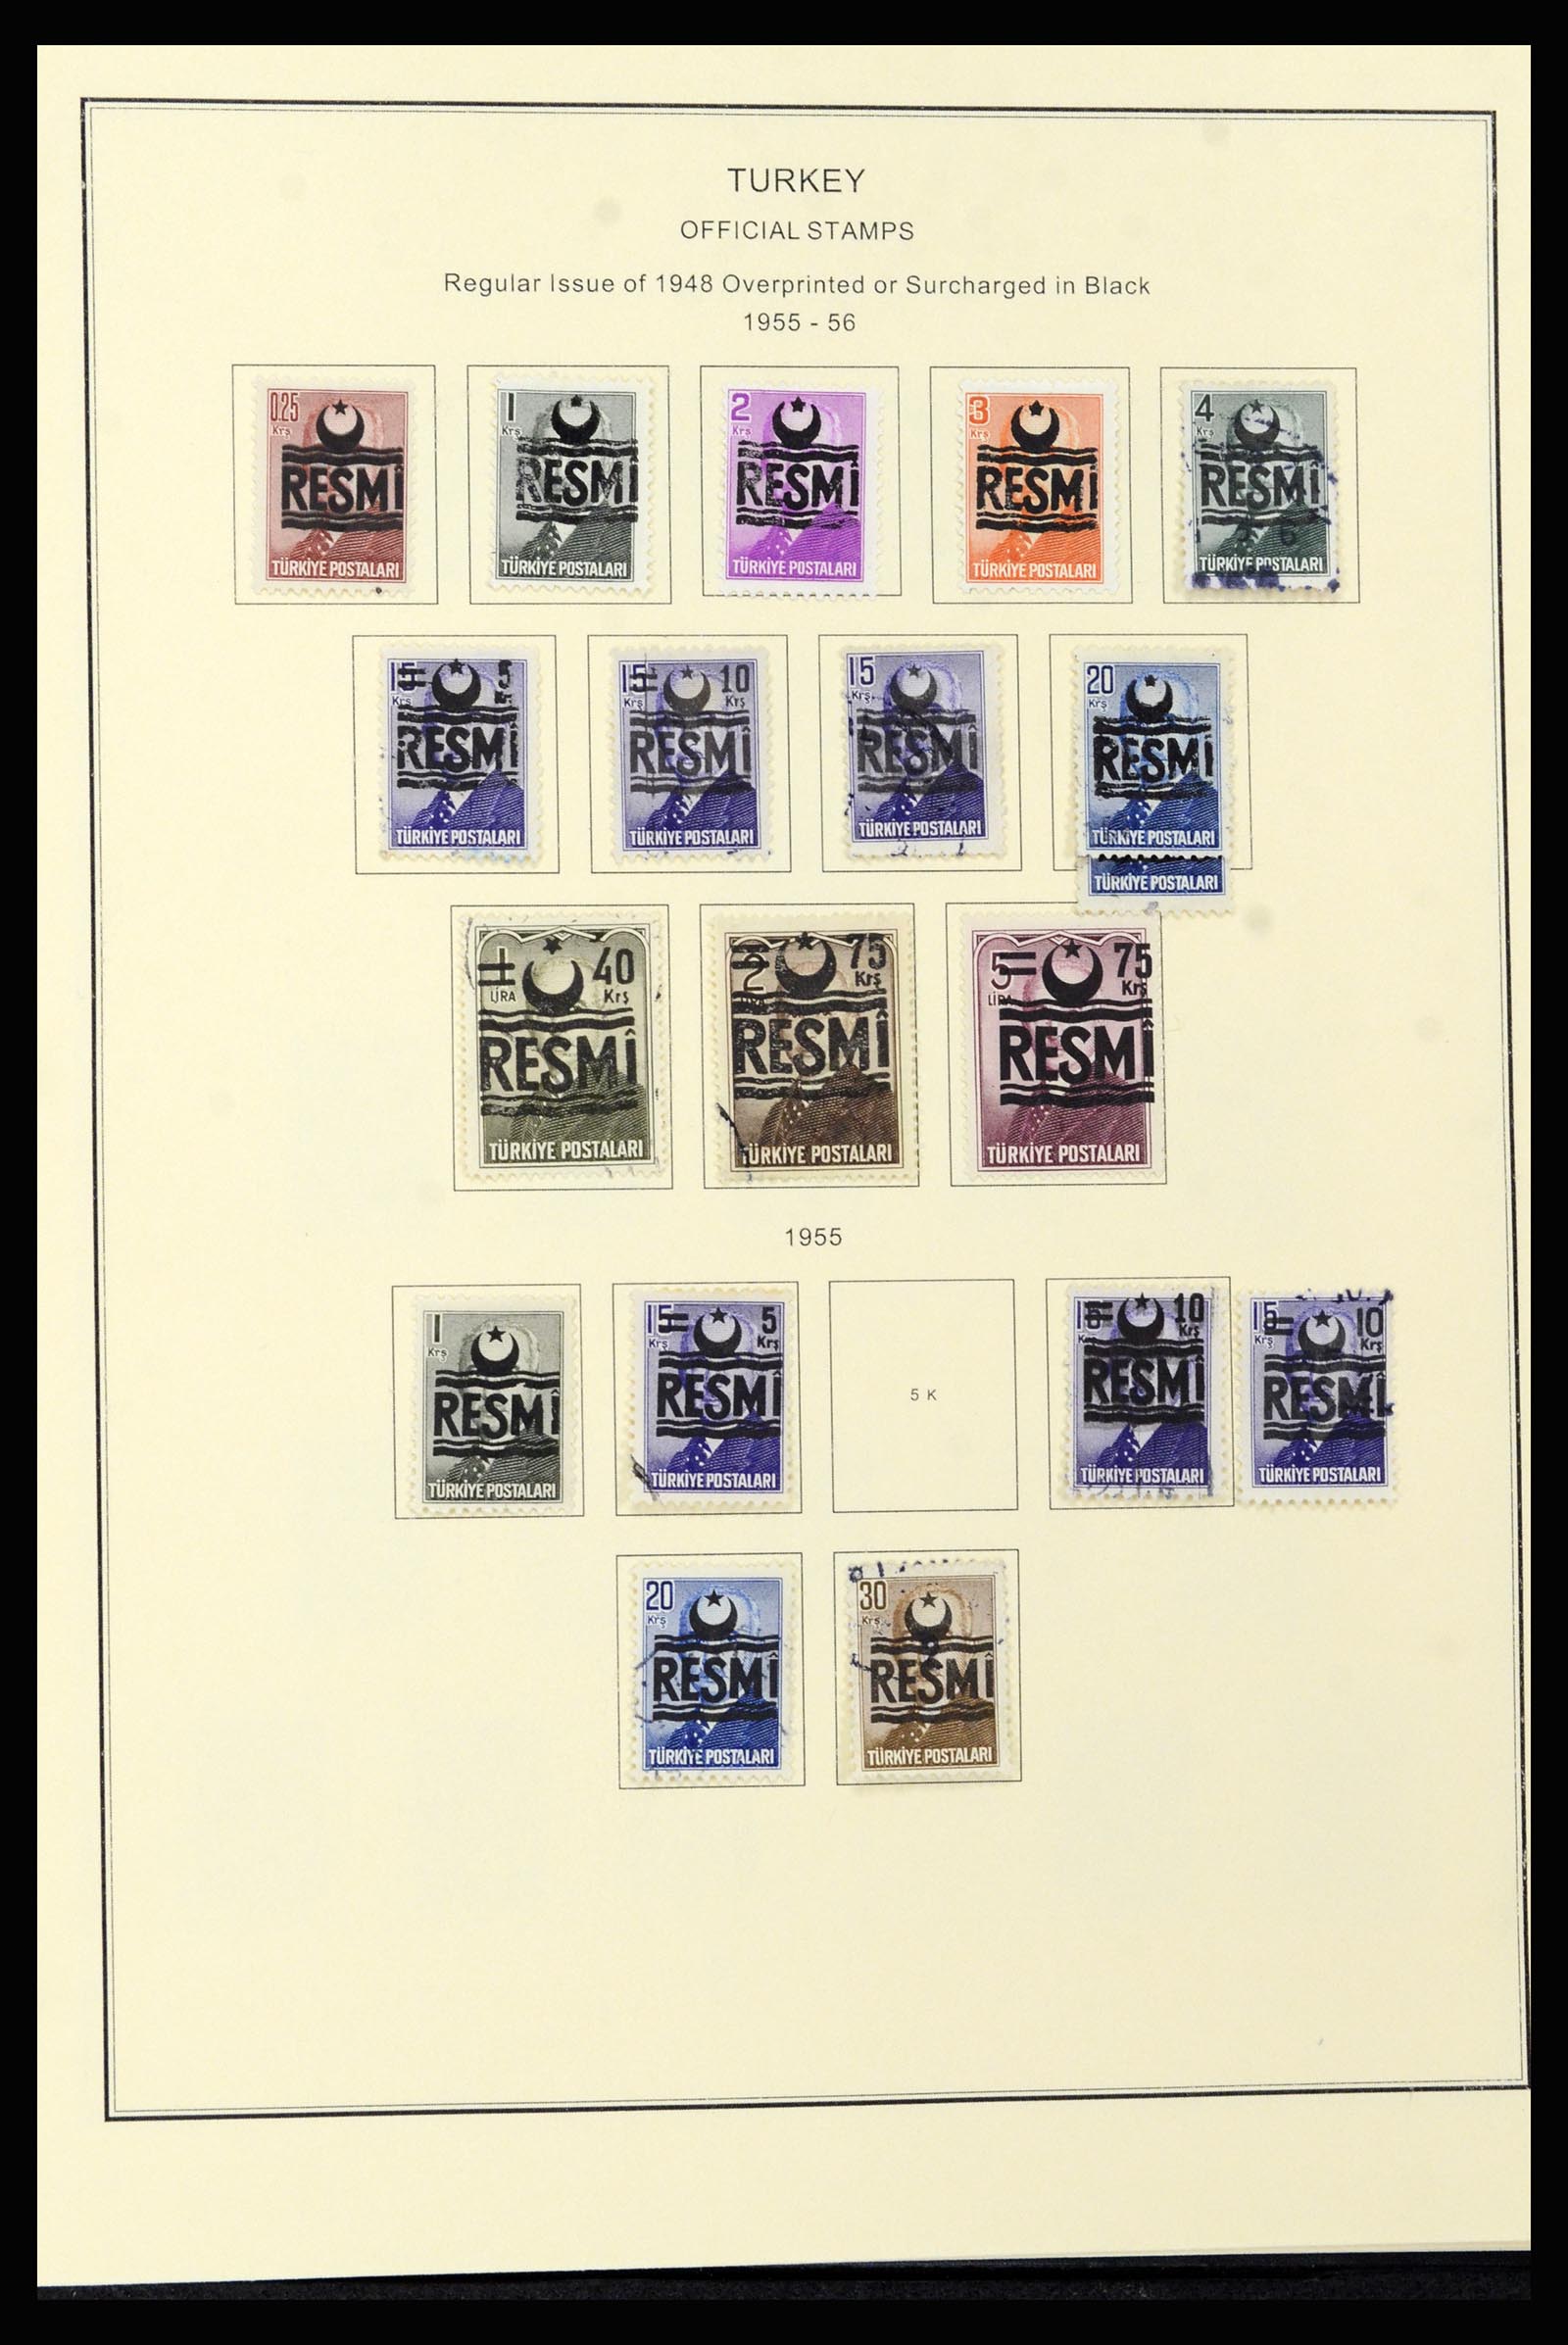 37224 072 - Stamp collection 37224 Turkey 1863-2000.